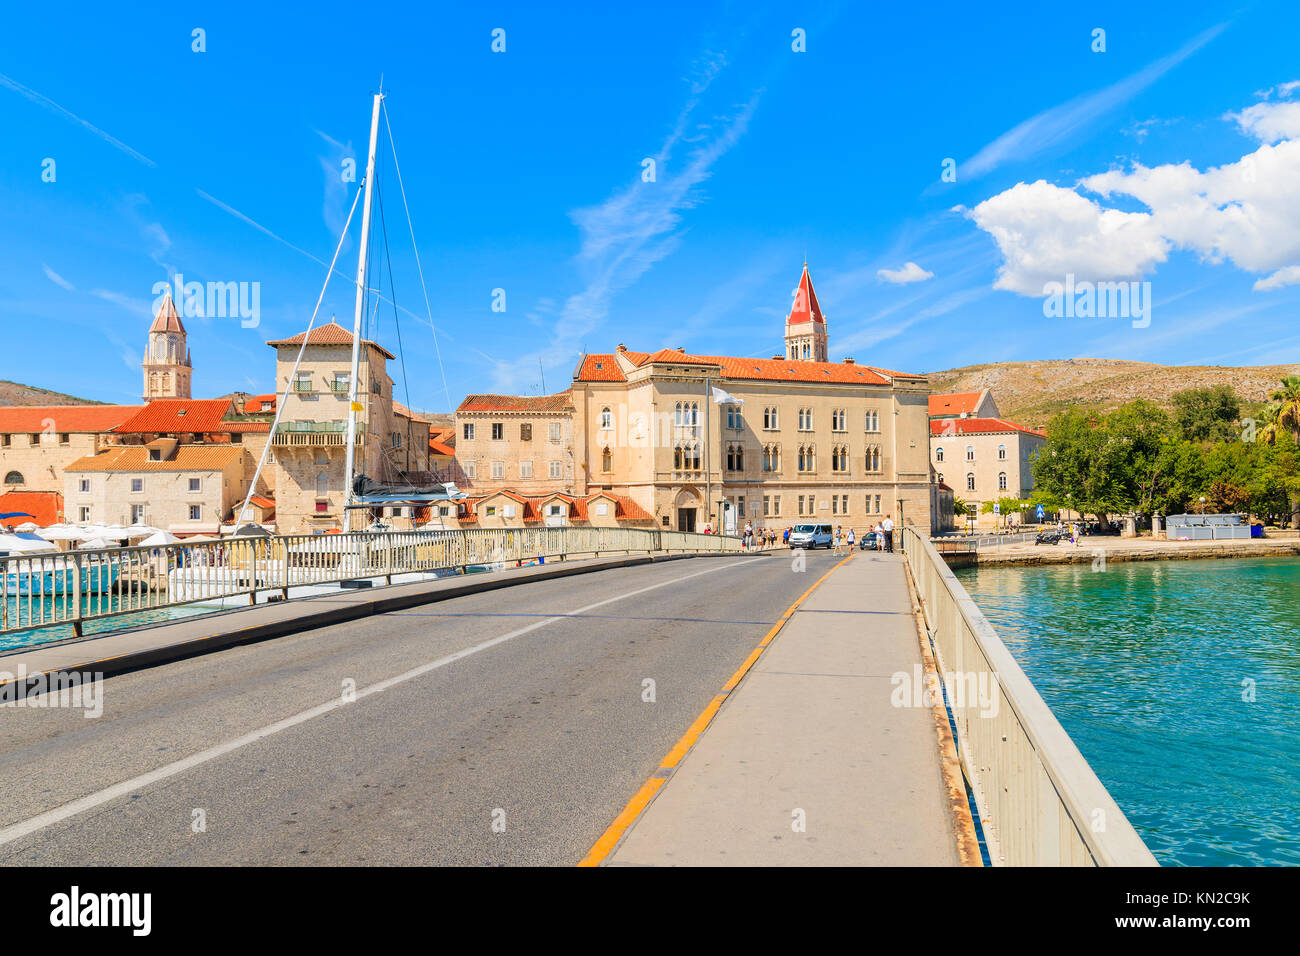 View of historic buildings in Trogir town from bridge over canal, Dalmatia, Croatia Stock Photo